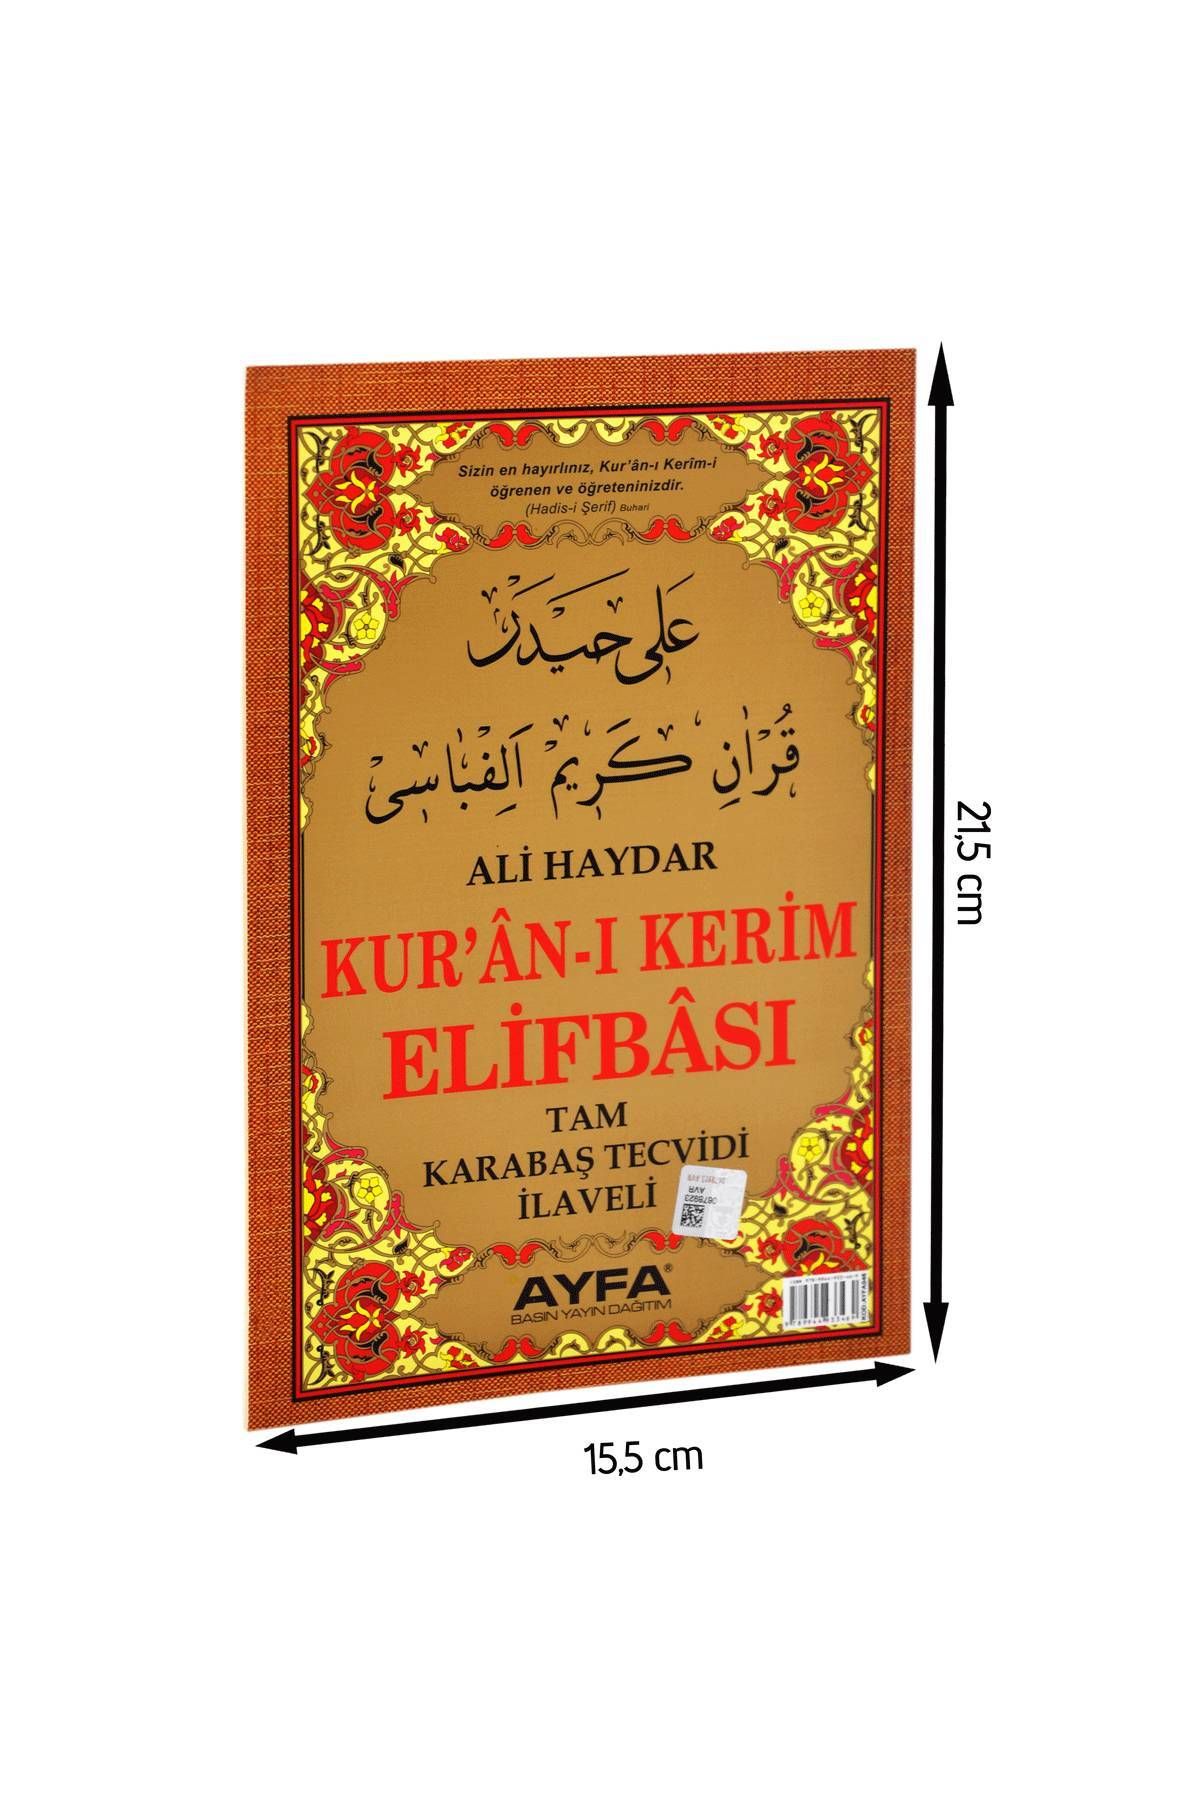 Ayfa Publications Али Хайдар Элифбасы-1659 9789944933506